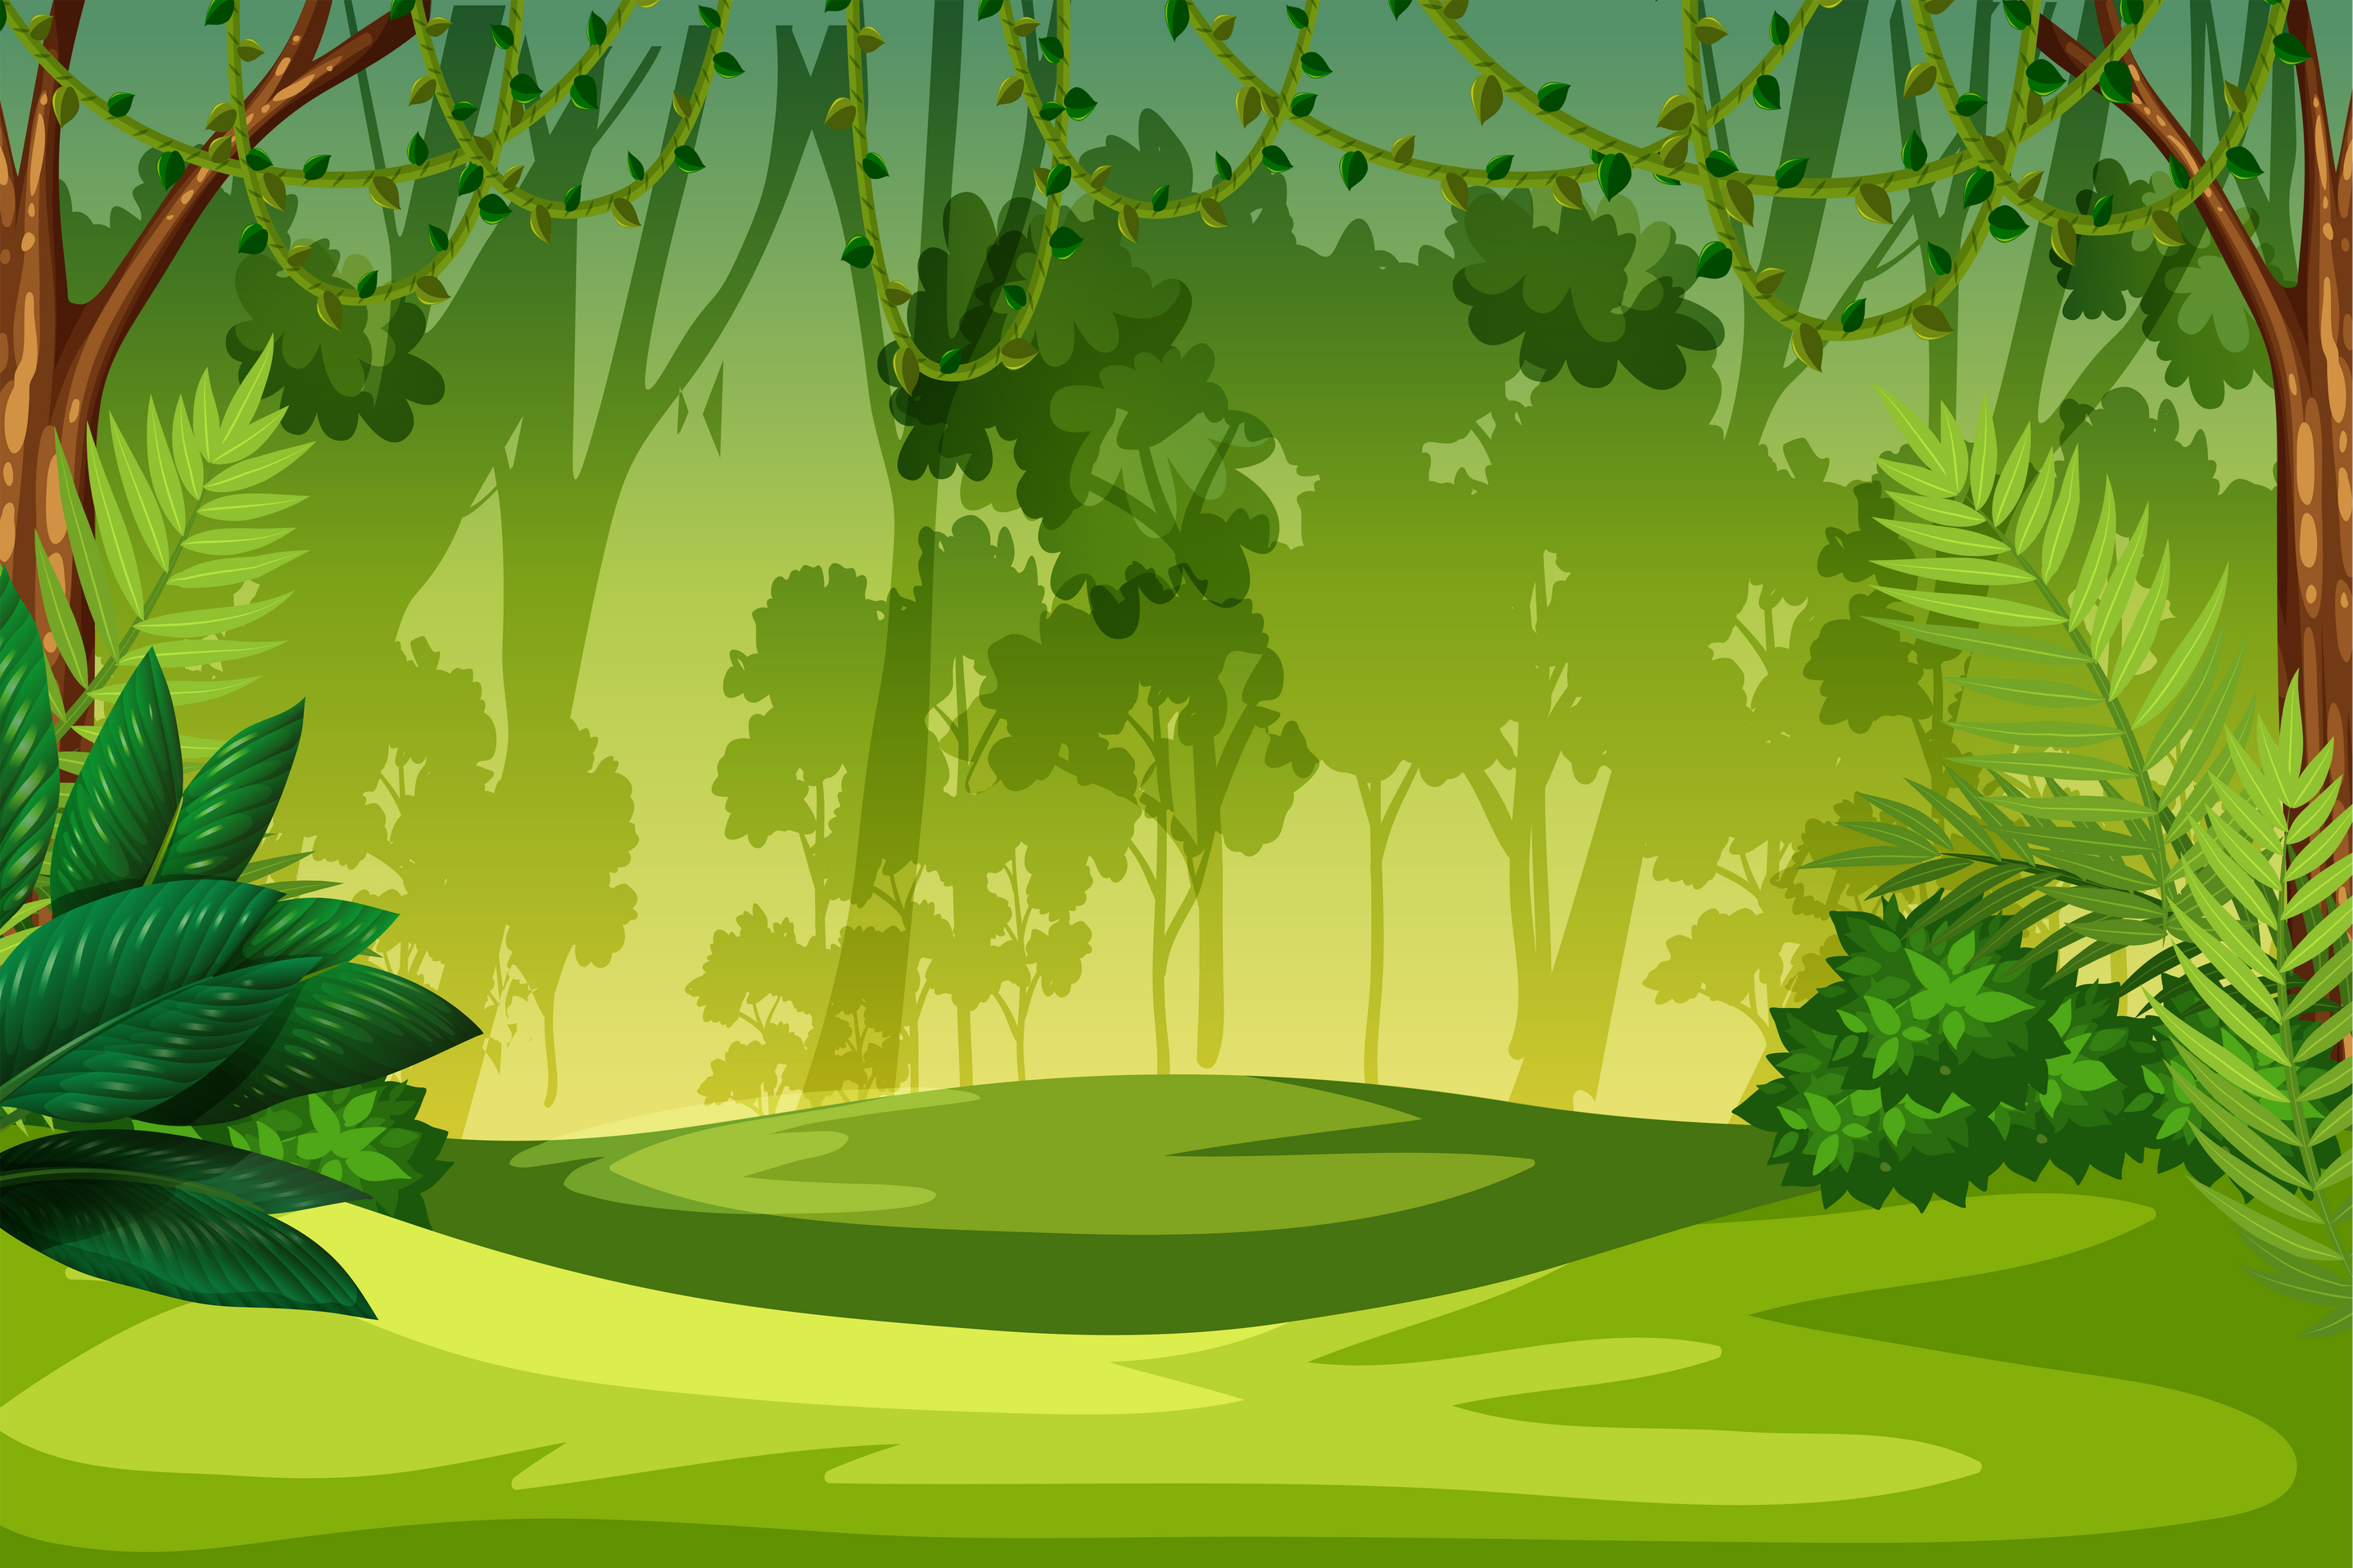 A green jungle landscape